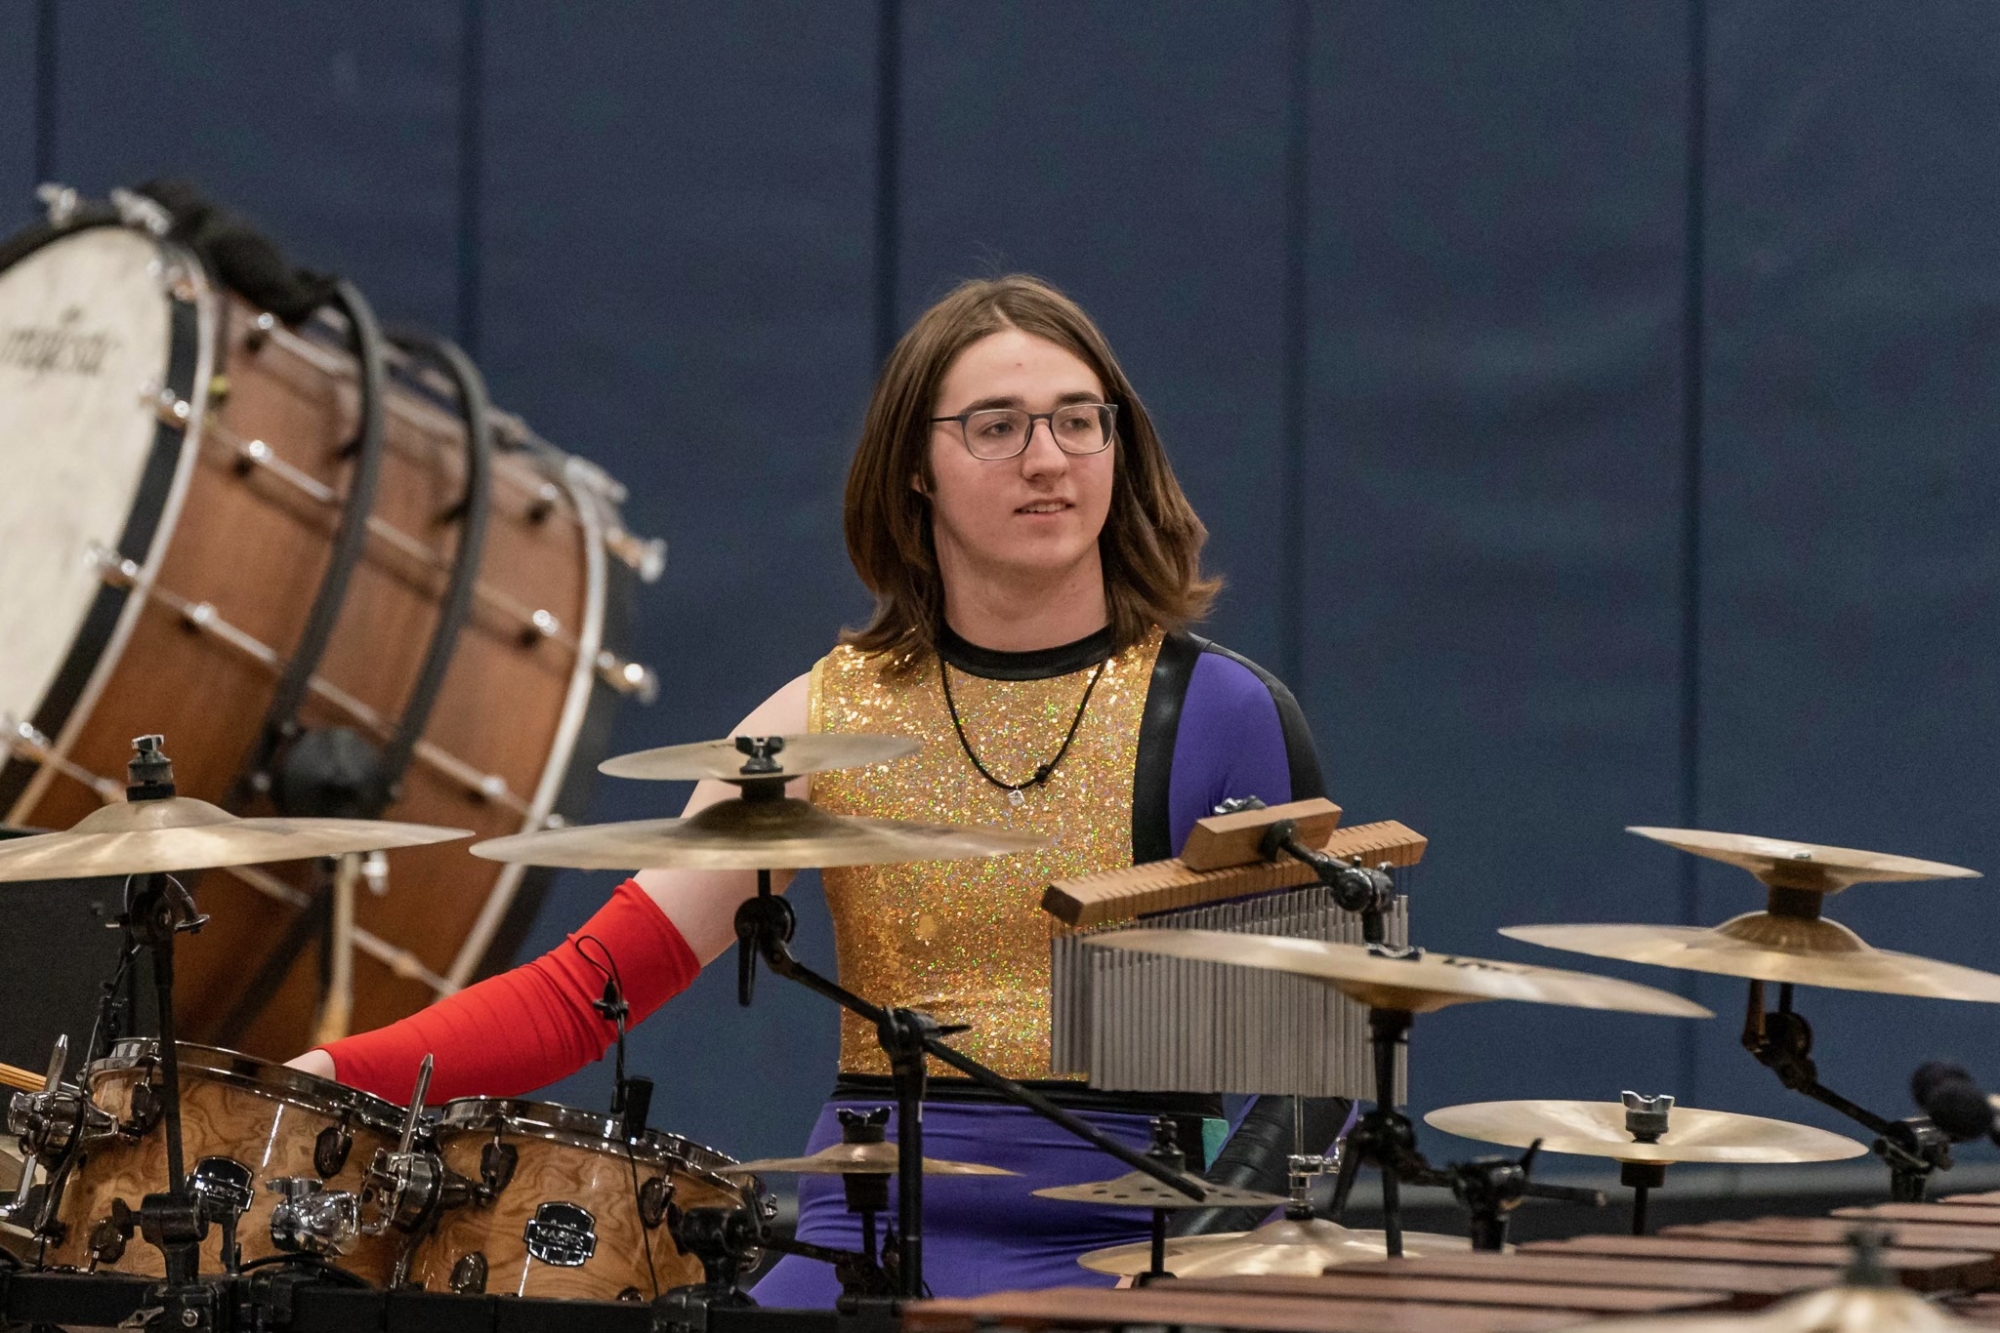 Drum Teacher Jacob Kendall